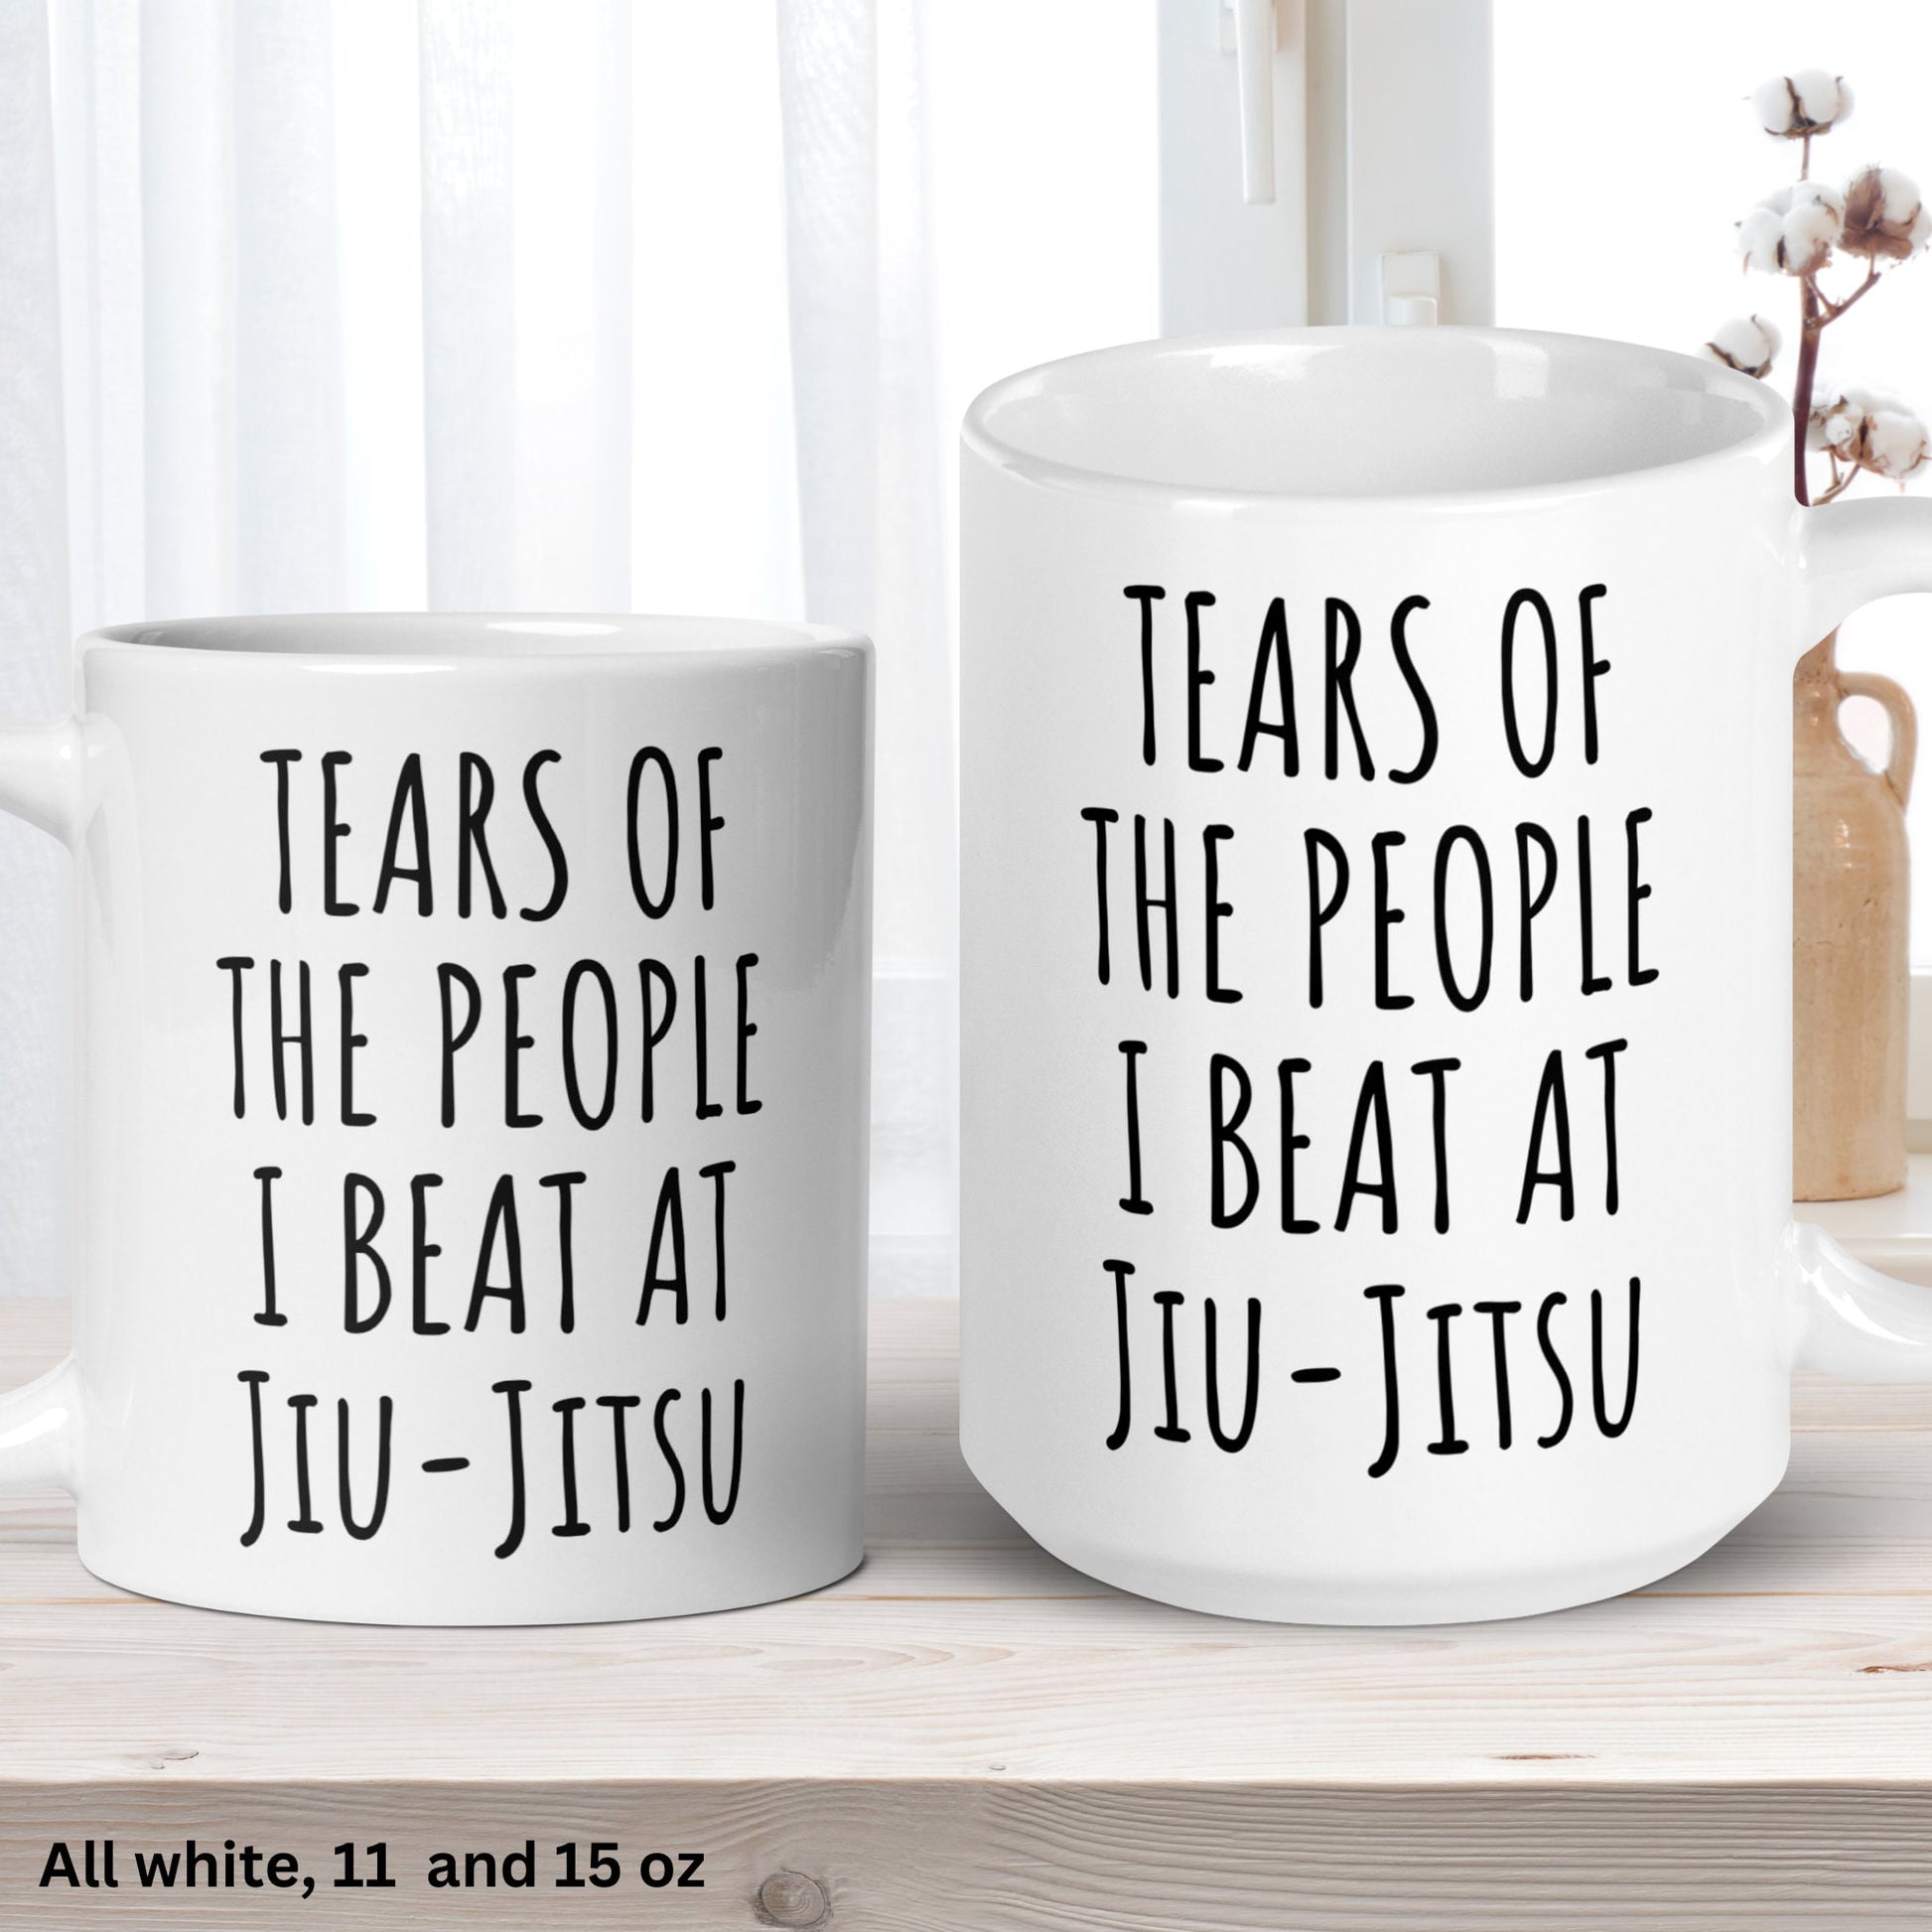 Jiu Jitsu Mug, Martial Arts Gifts, Tears of The People I Beat At Jiu-Jitsu, Jiu Jitsu Gifts, Funny Coffee Mug, Brazilian Jiu-Jitsu Gift 1245 - Zehnaria - HOBBIES & TRAVEL - Mugs